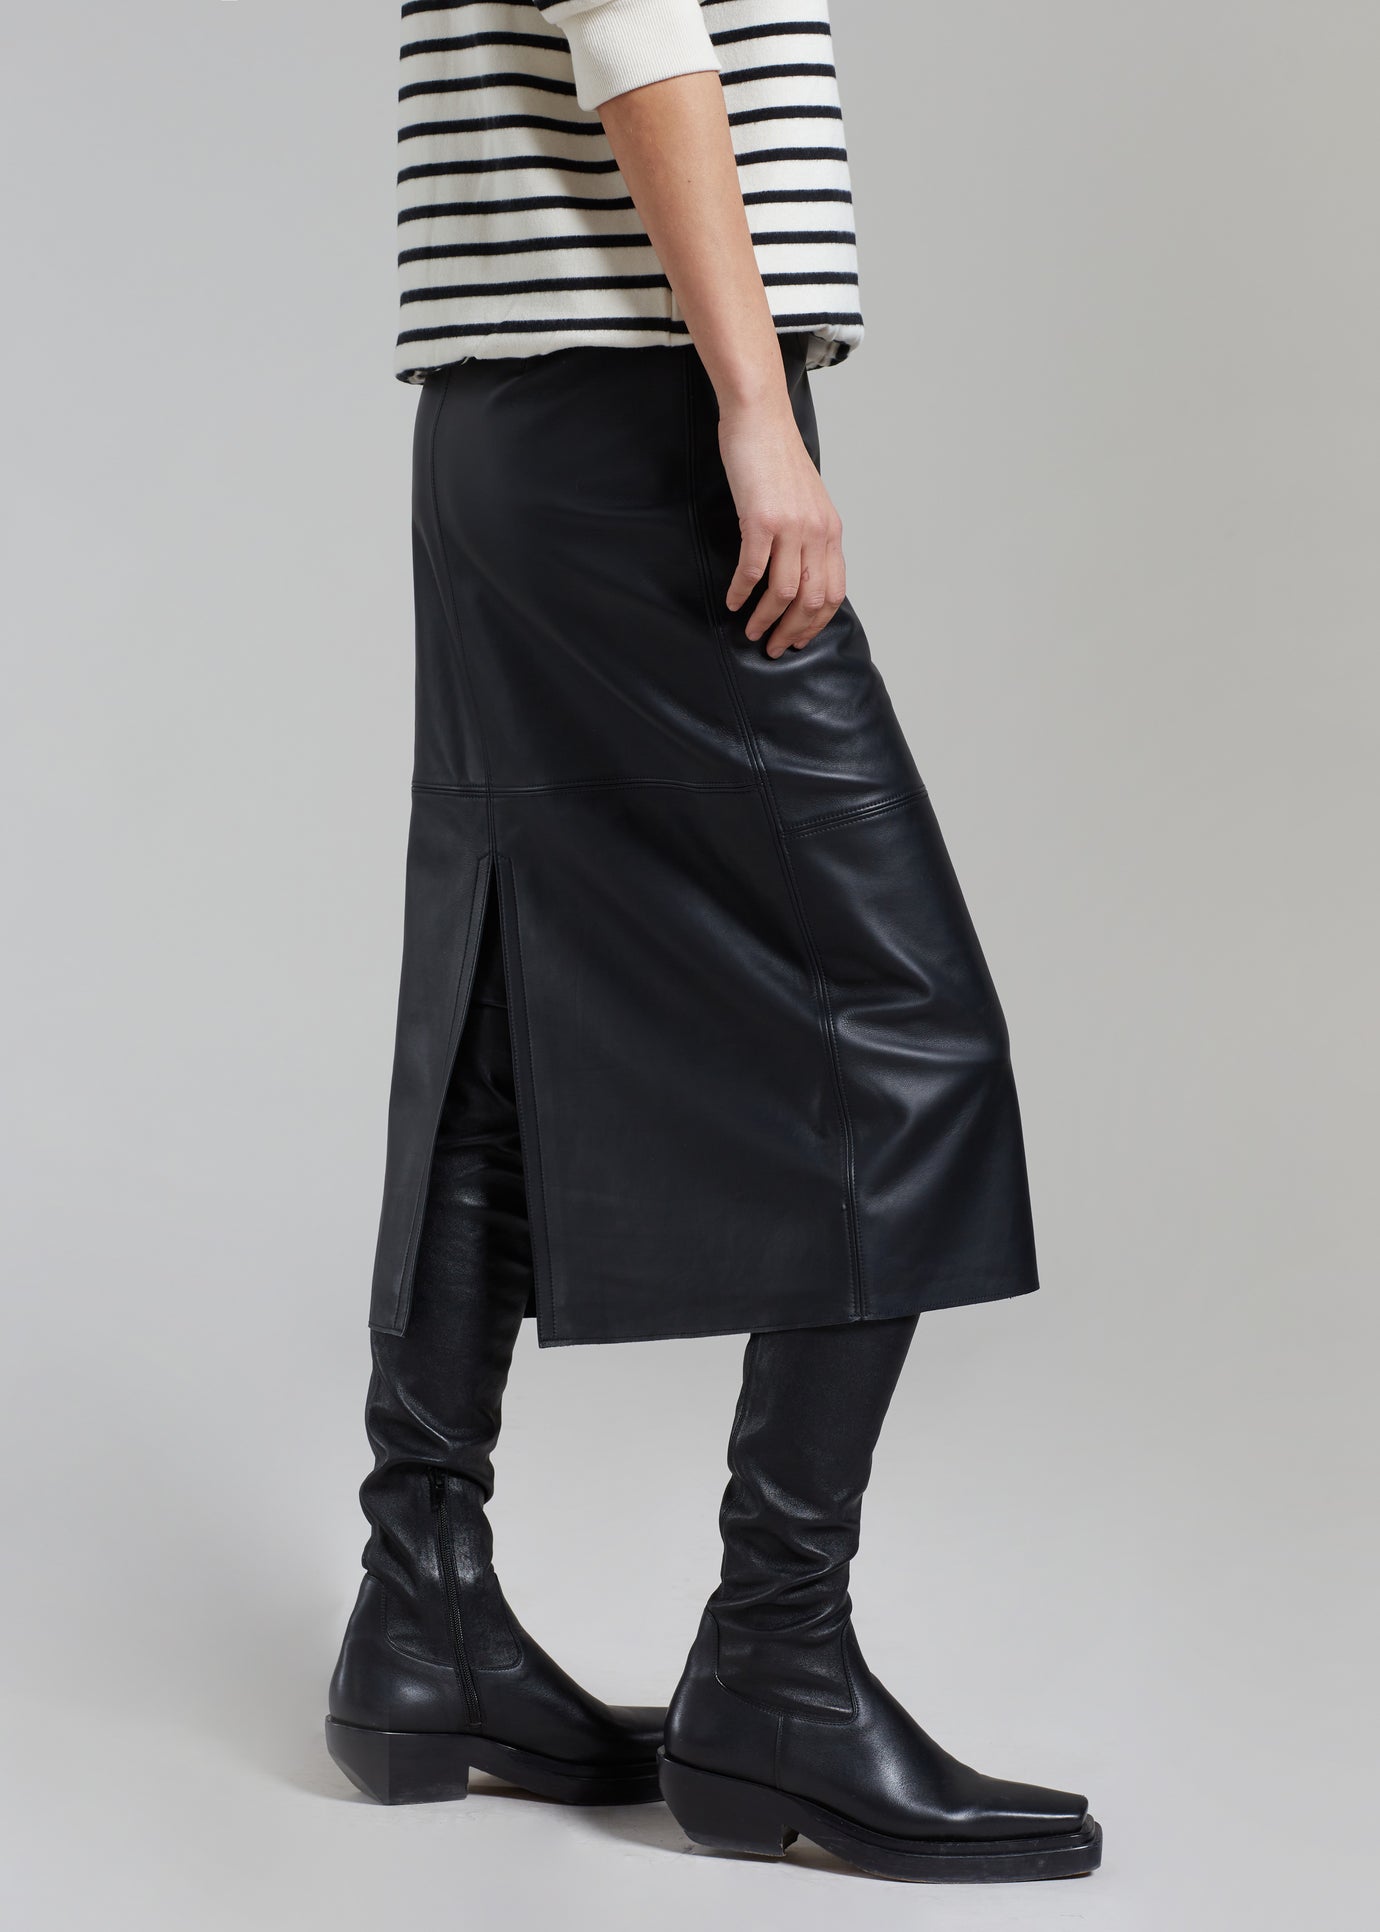 Heather Leather Pencil Skirt - Black - 1